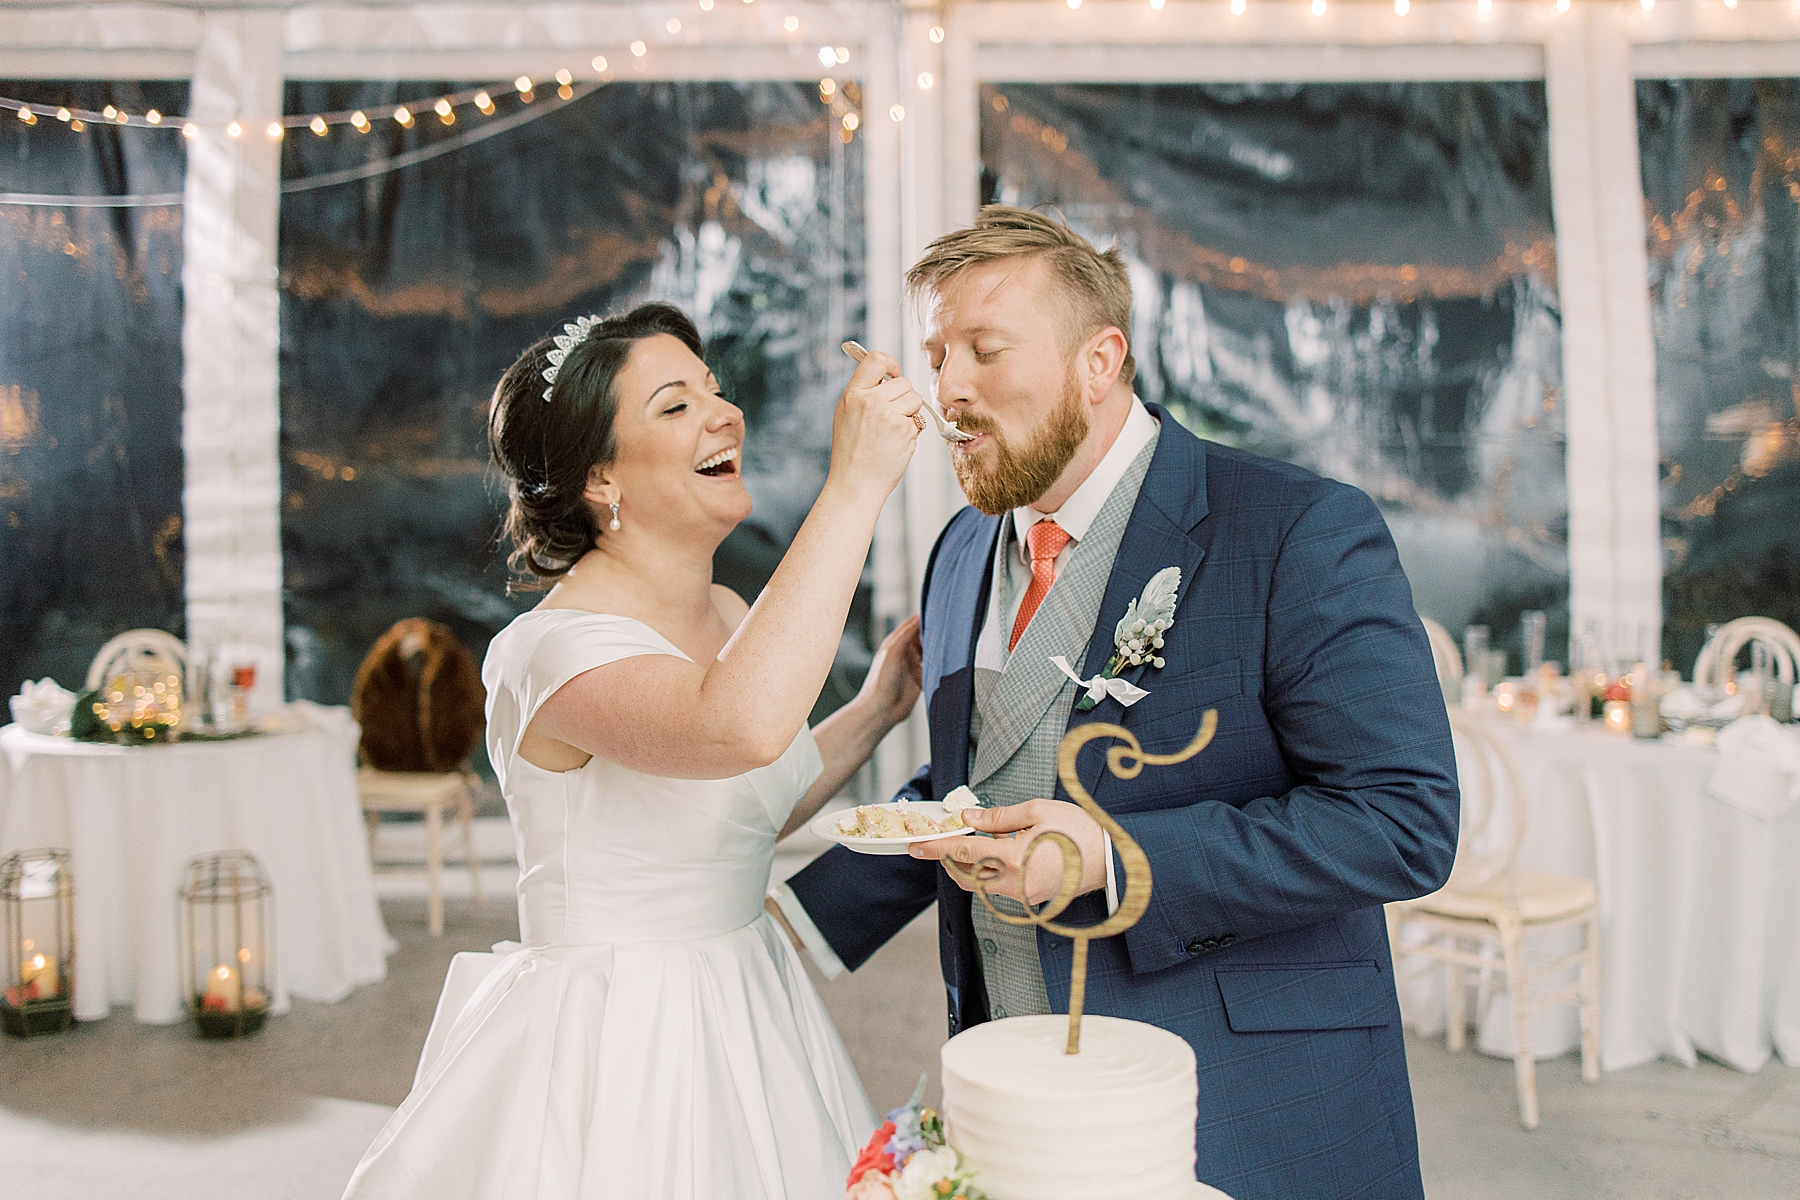 bride feeds groom cake during Bellevue Hall wedding reception